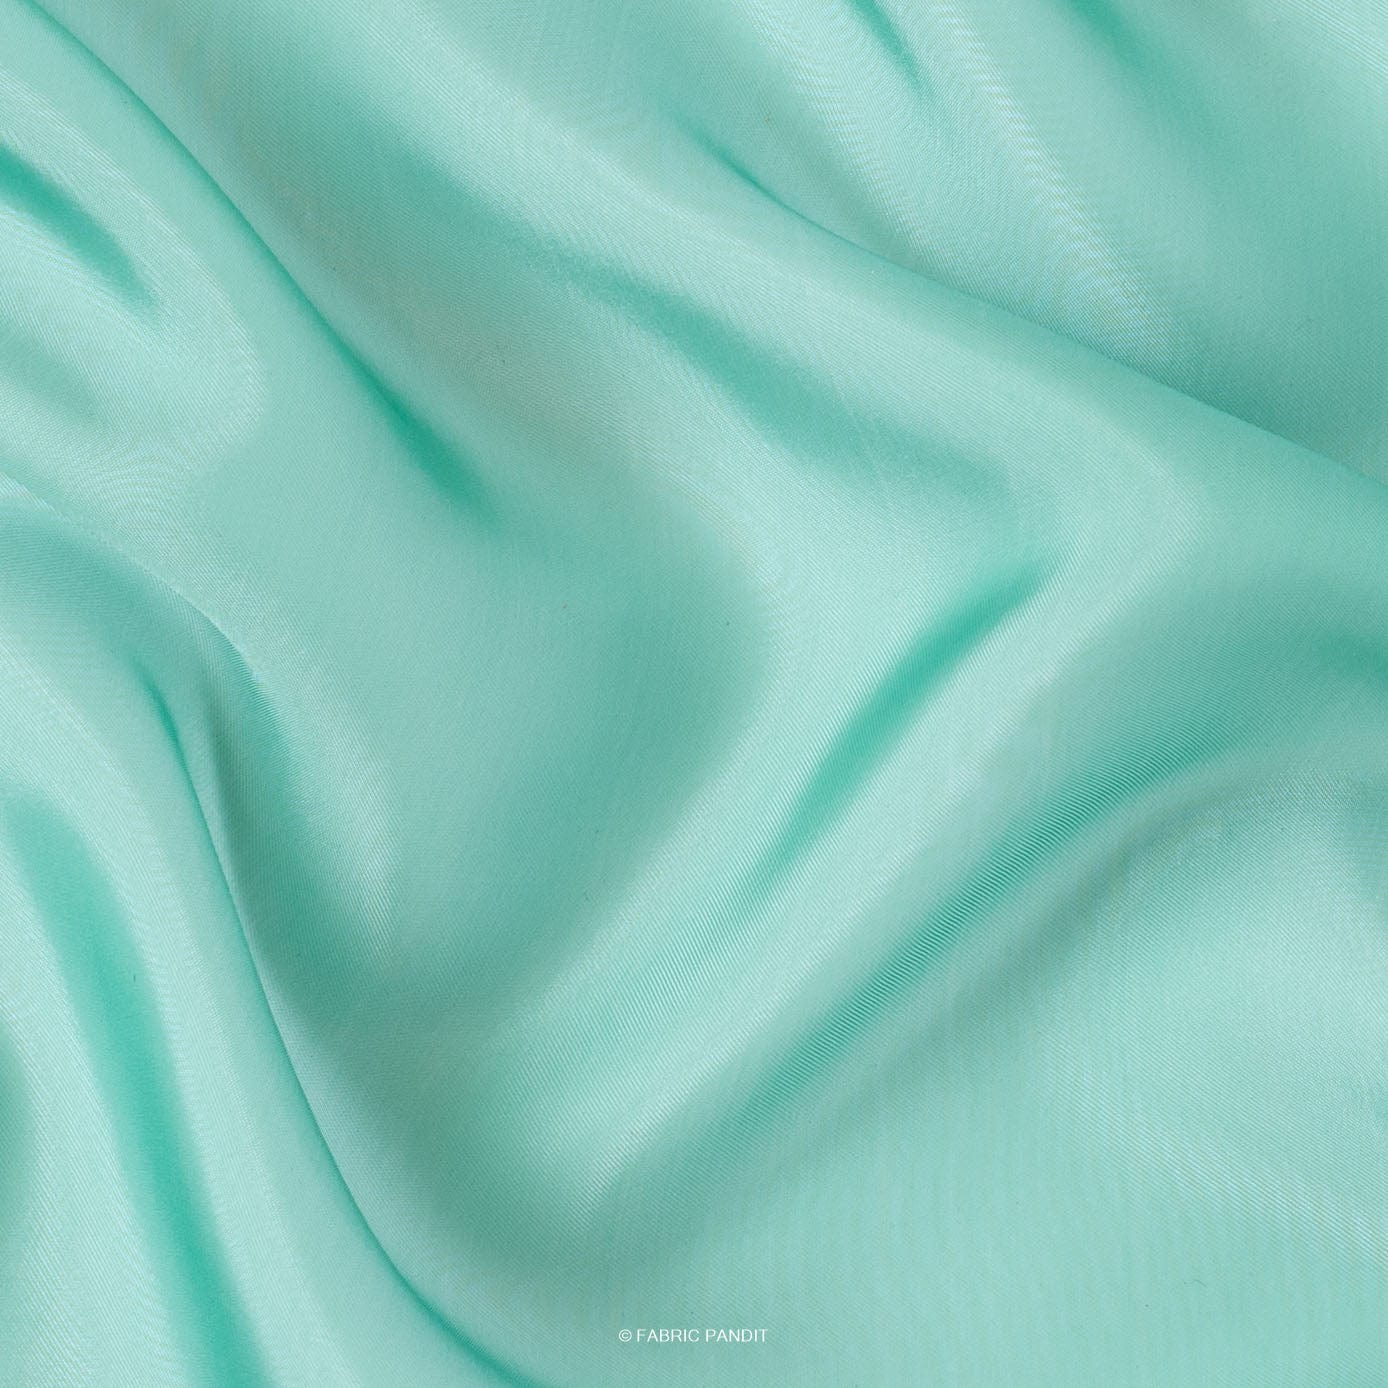 Fabric Pandit Fabric Light Turquoise Plain Premium Organza Fabric (Width 44 Inches)